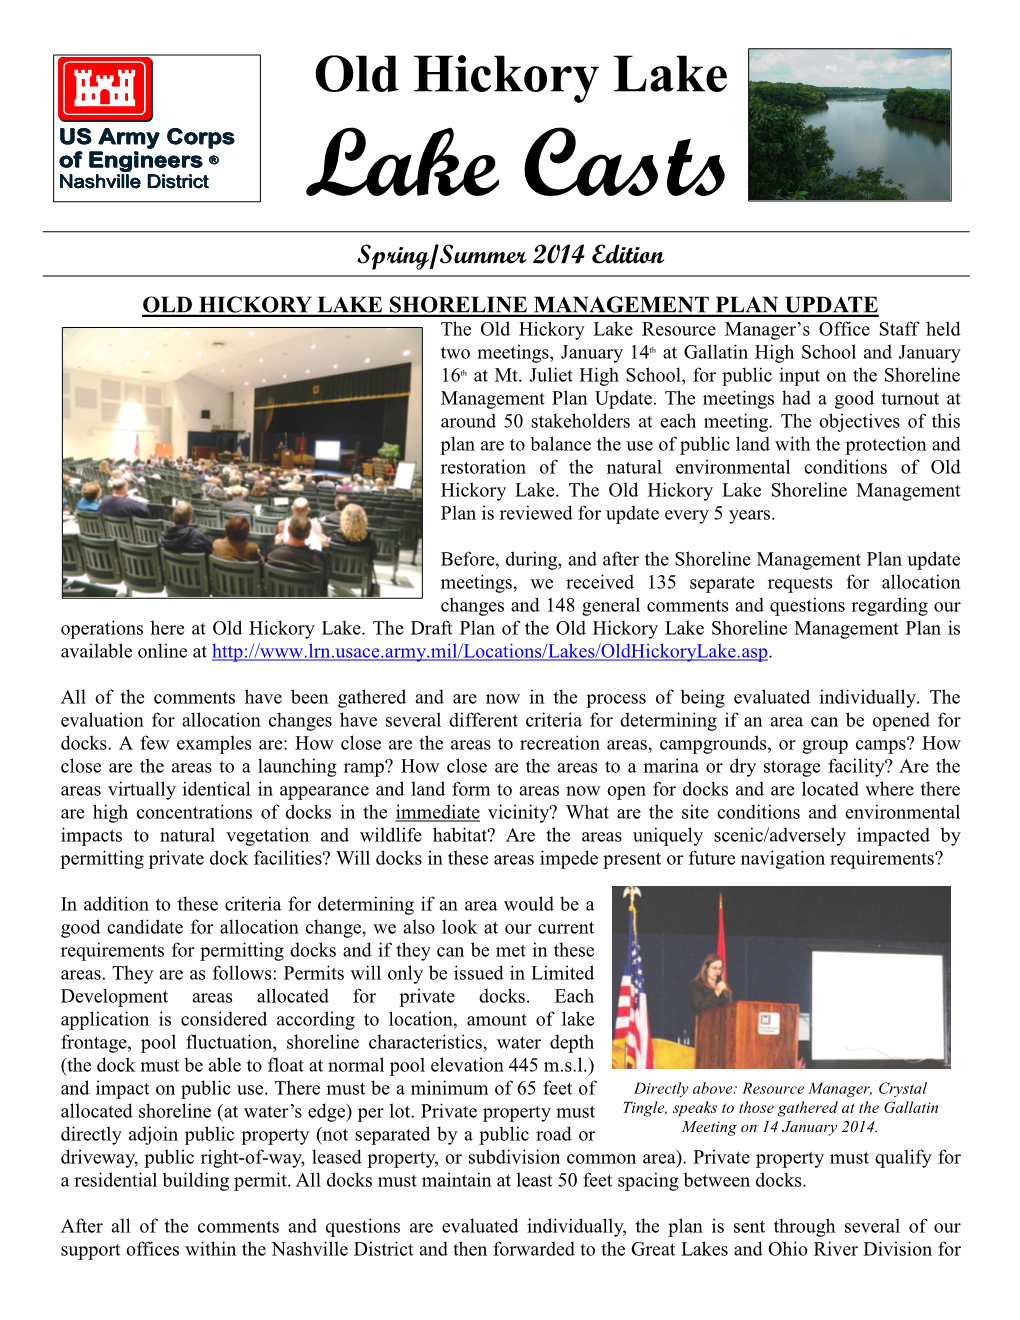 Old Hickory Lake Lake Casts